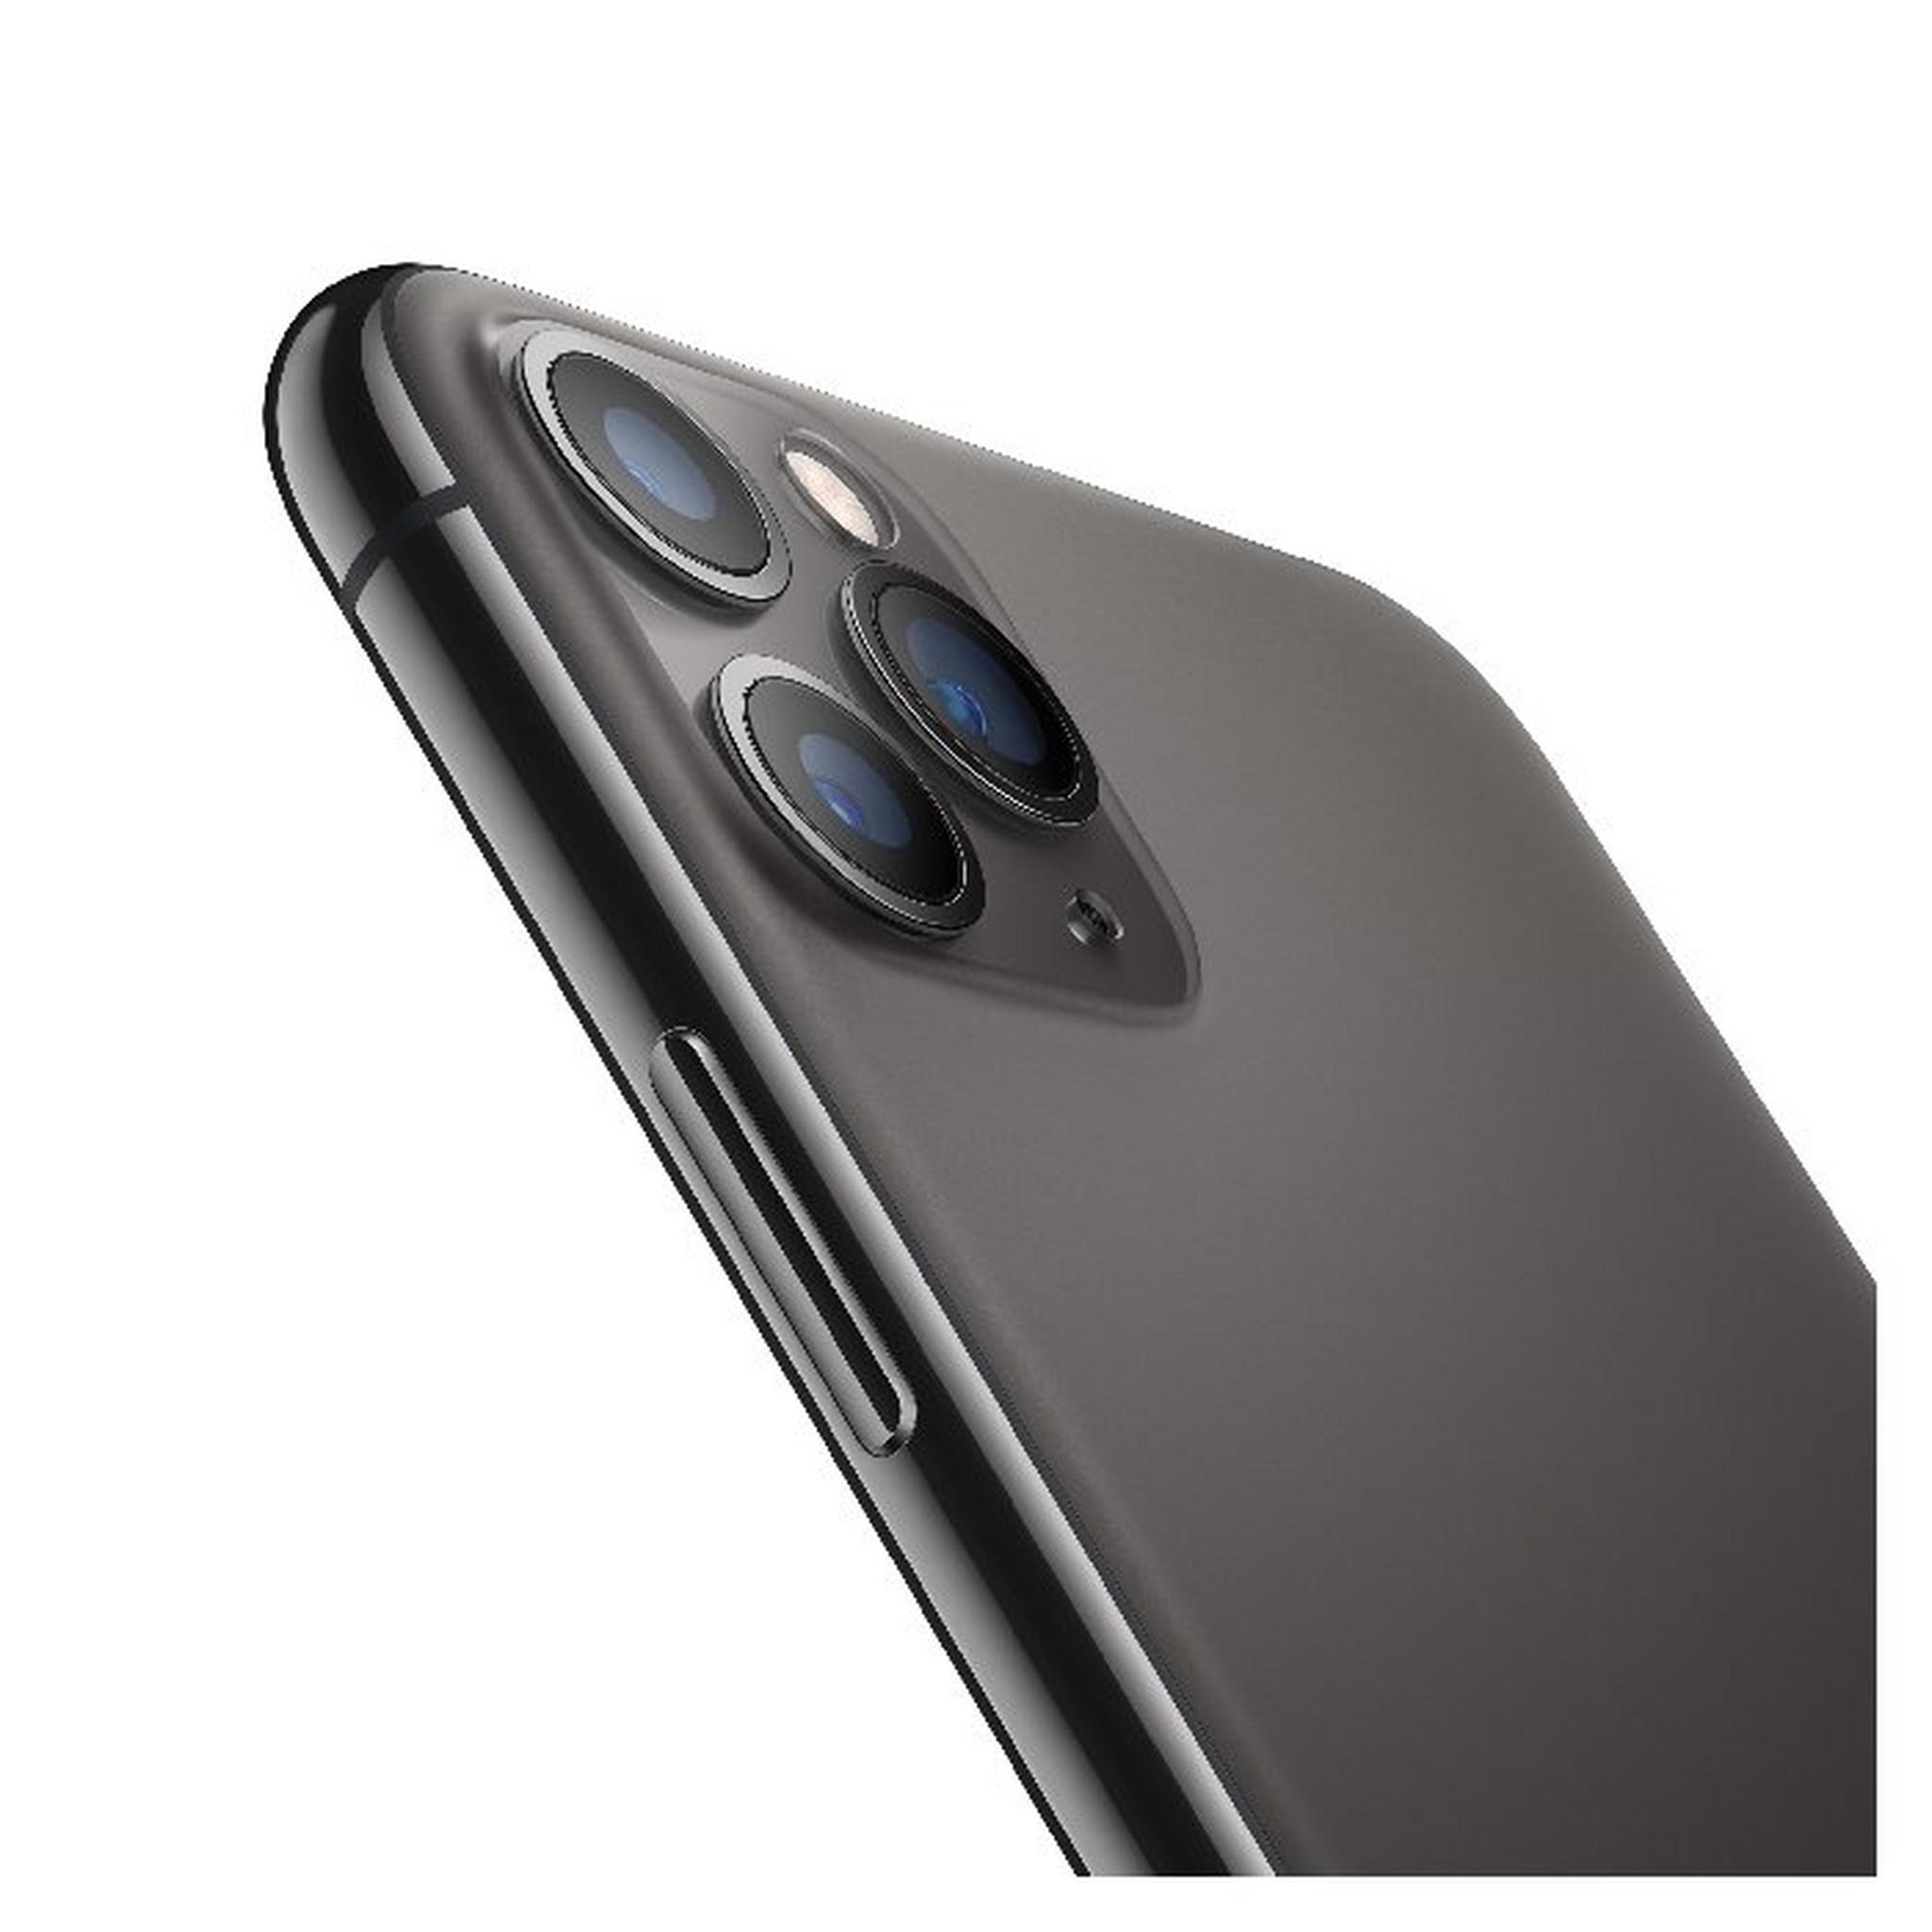 Apple iPhone 11 Pro 64GB Phone - Space Grey